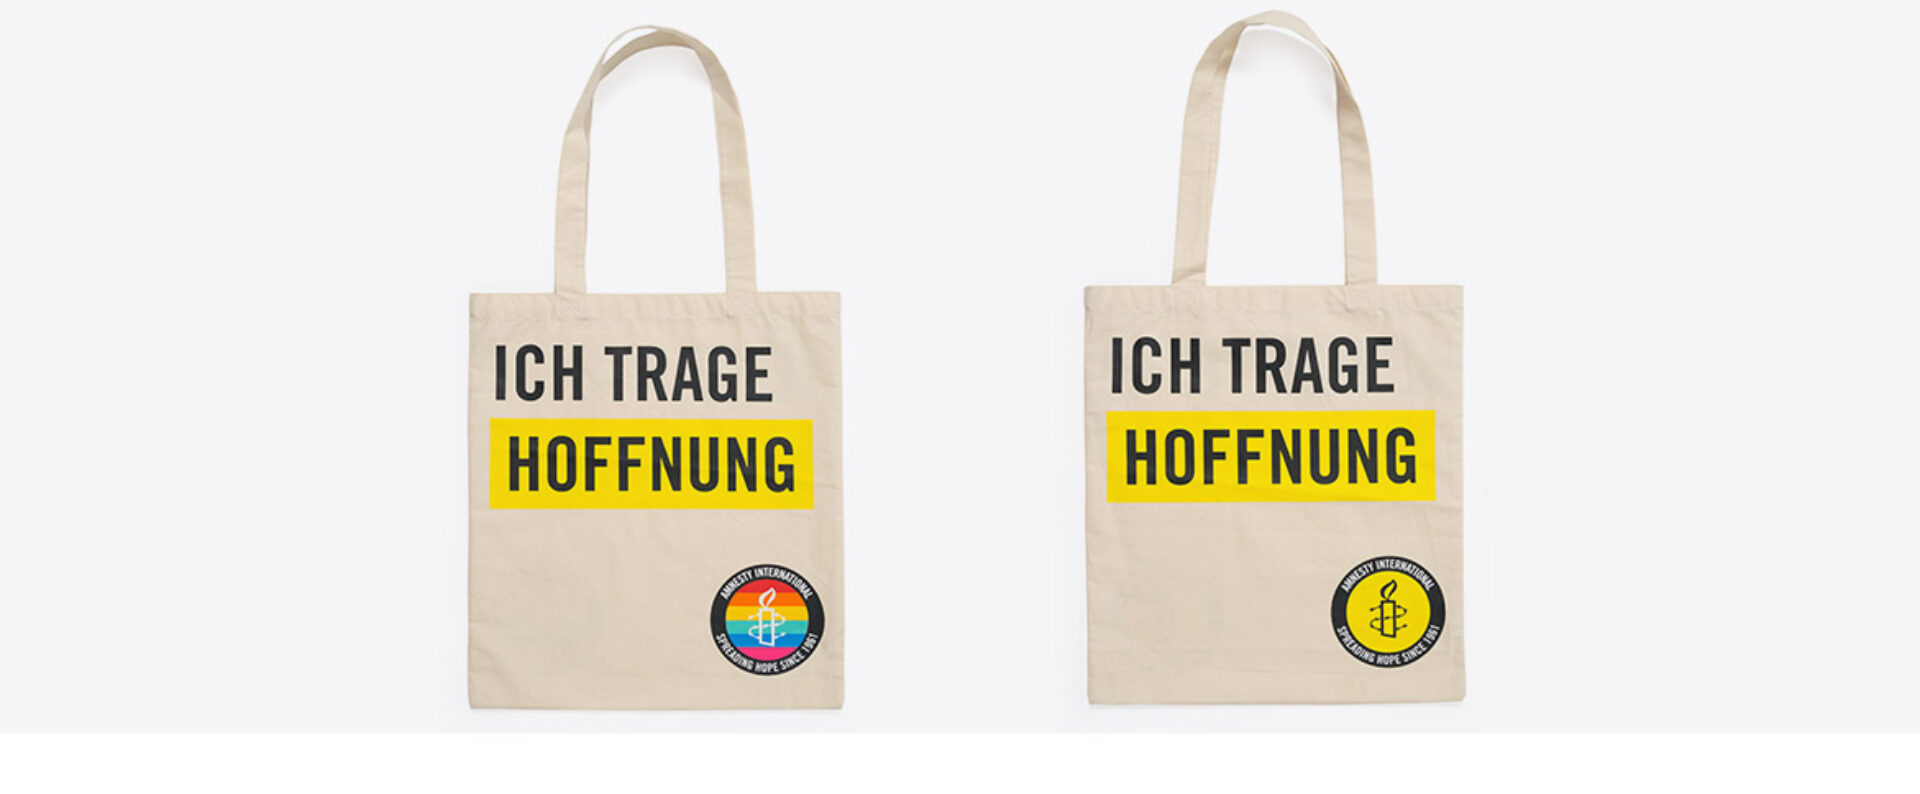 Referenzen Amnesty International Shopping Bags